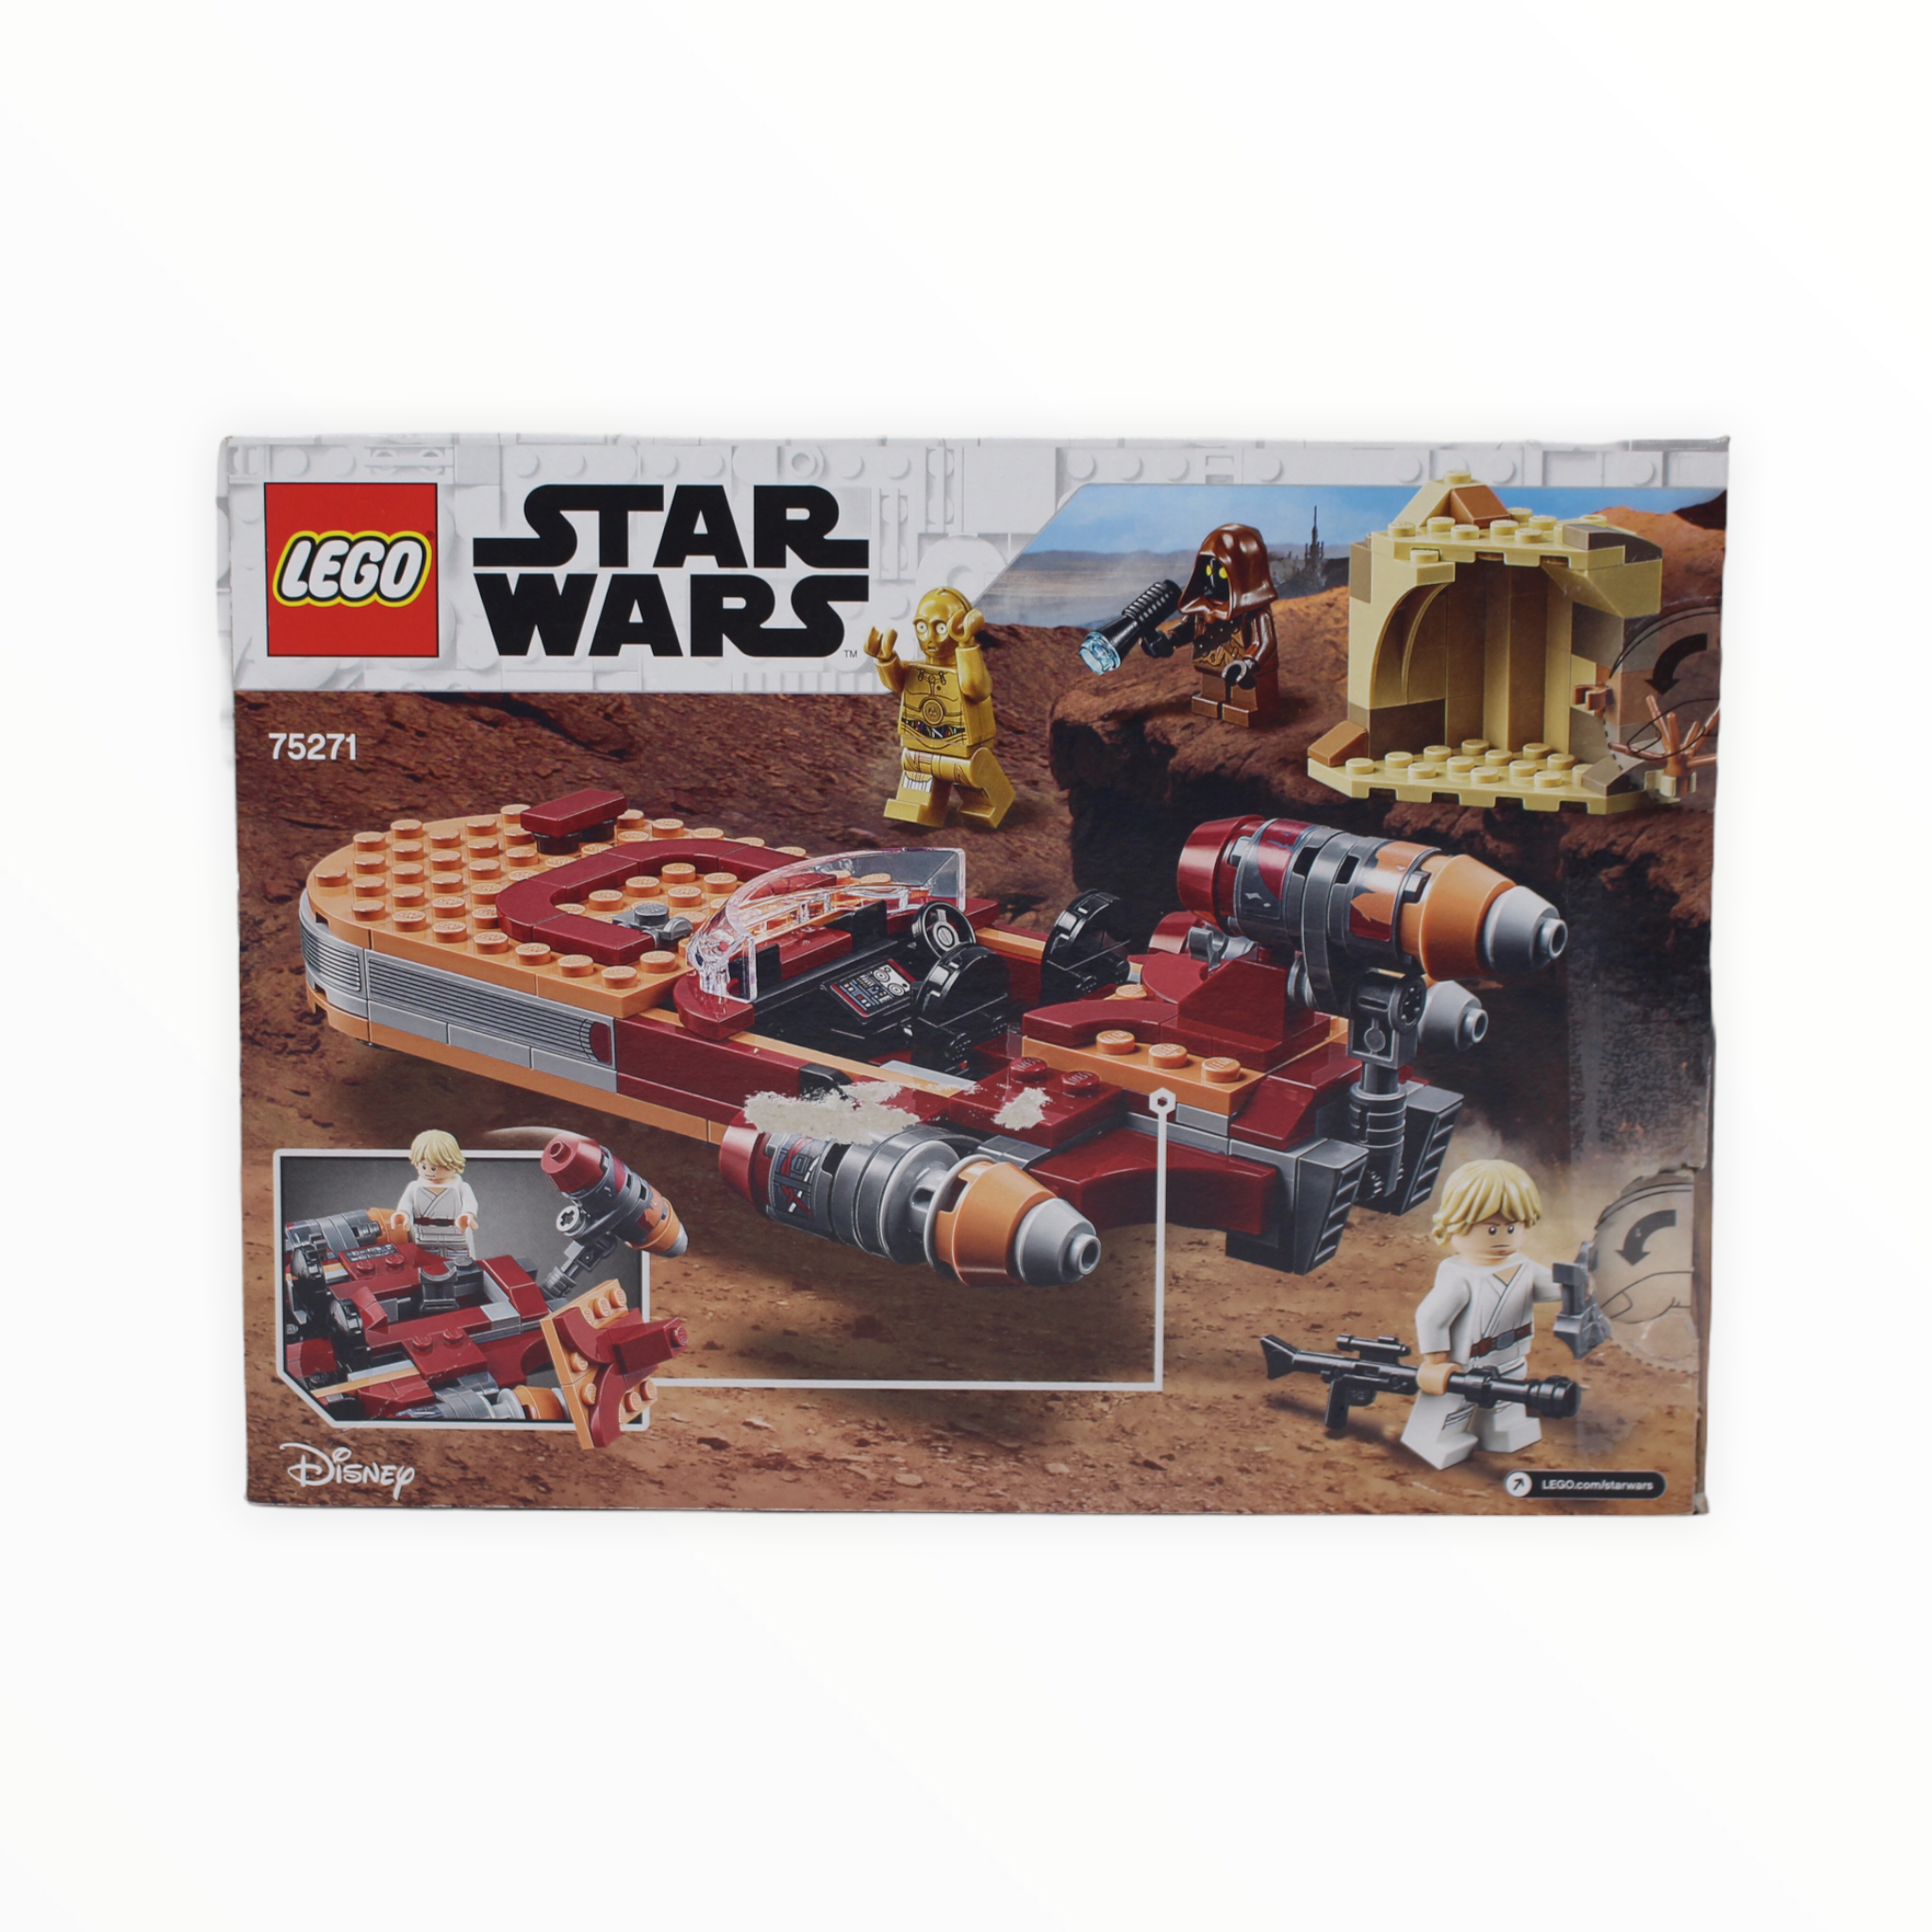 Certified Used Set 75271 Star Wars Luke Skywalker’s Landspeeder